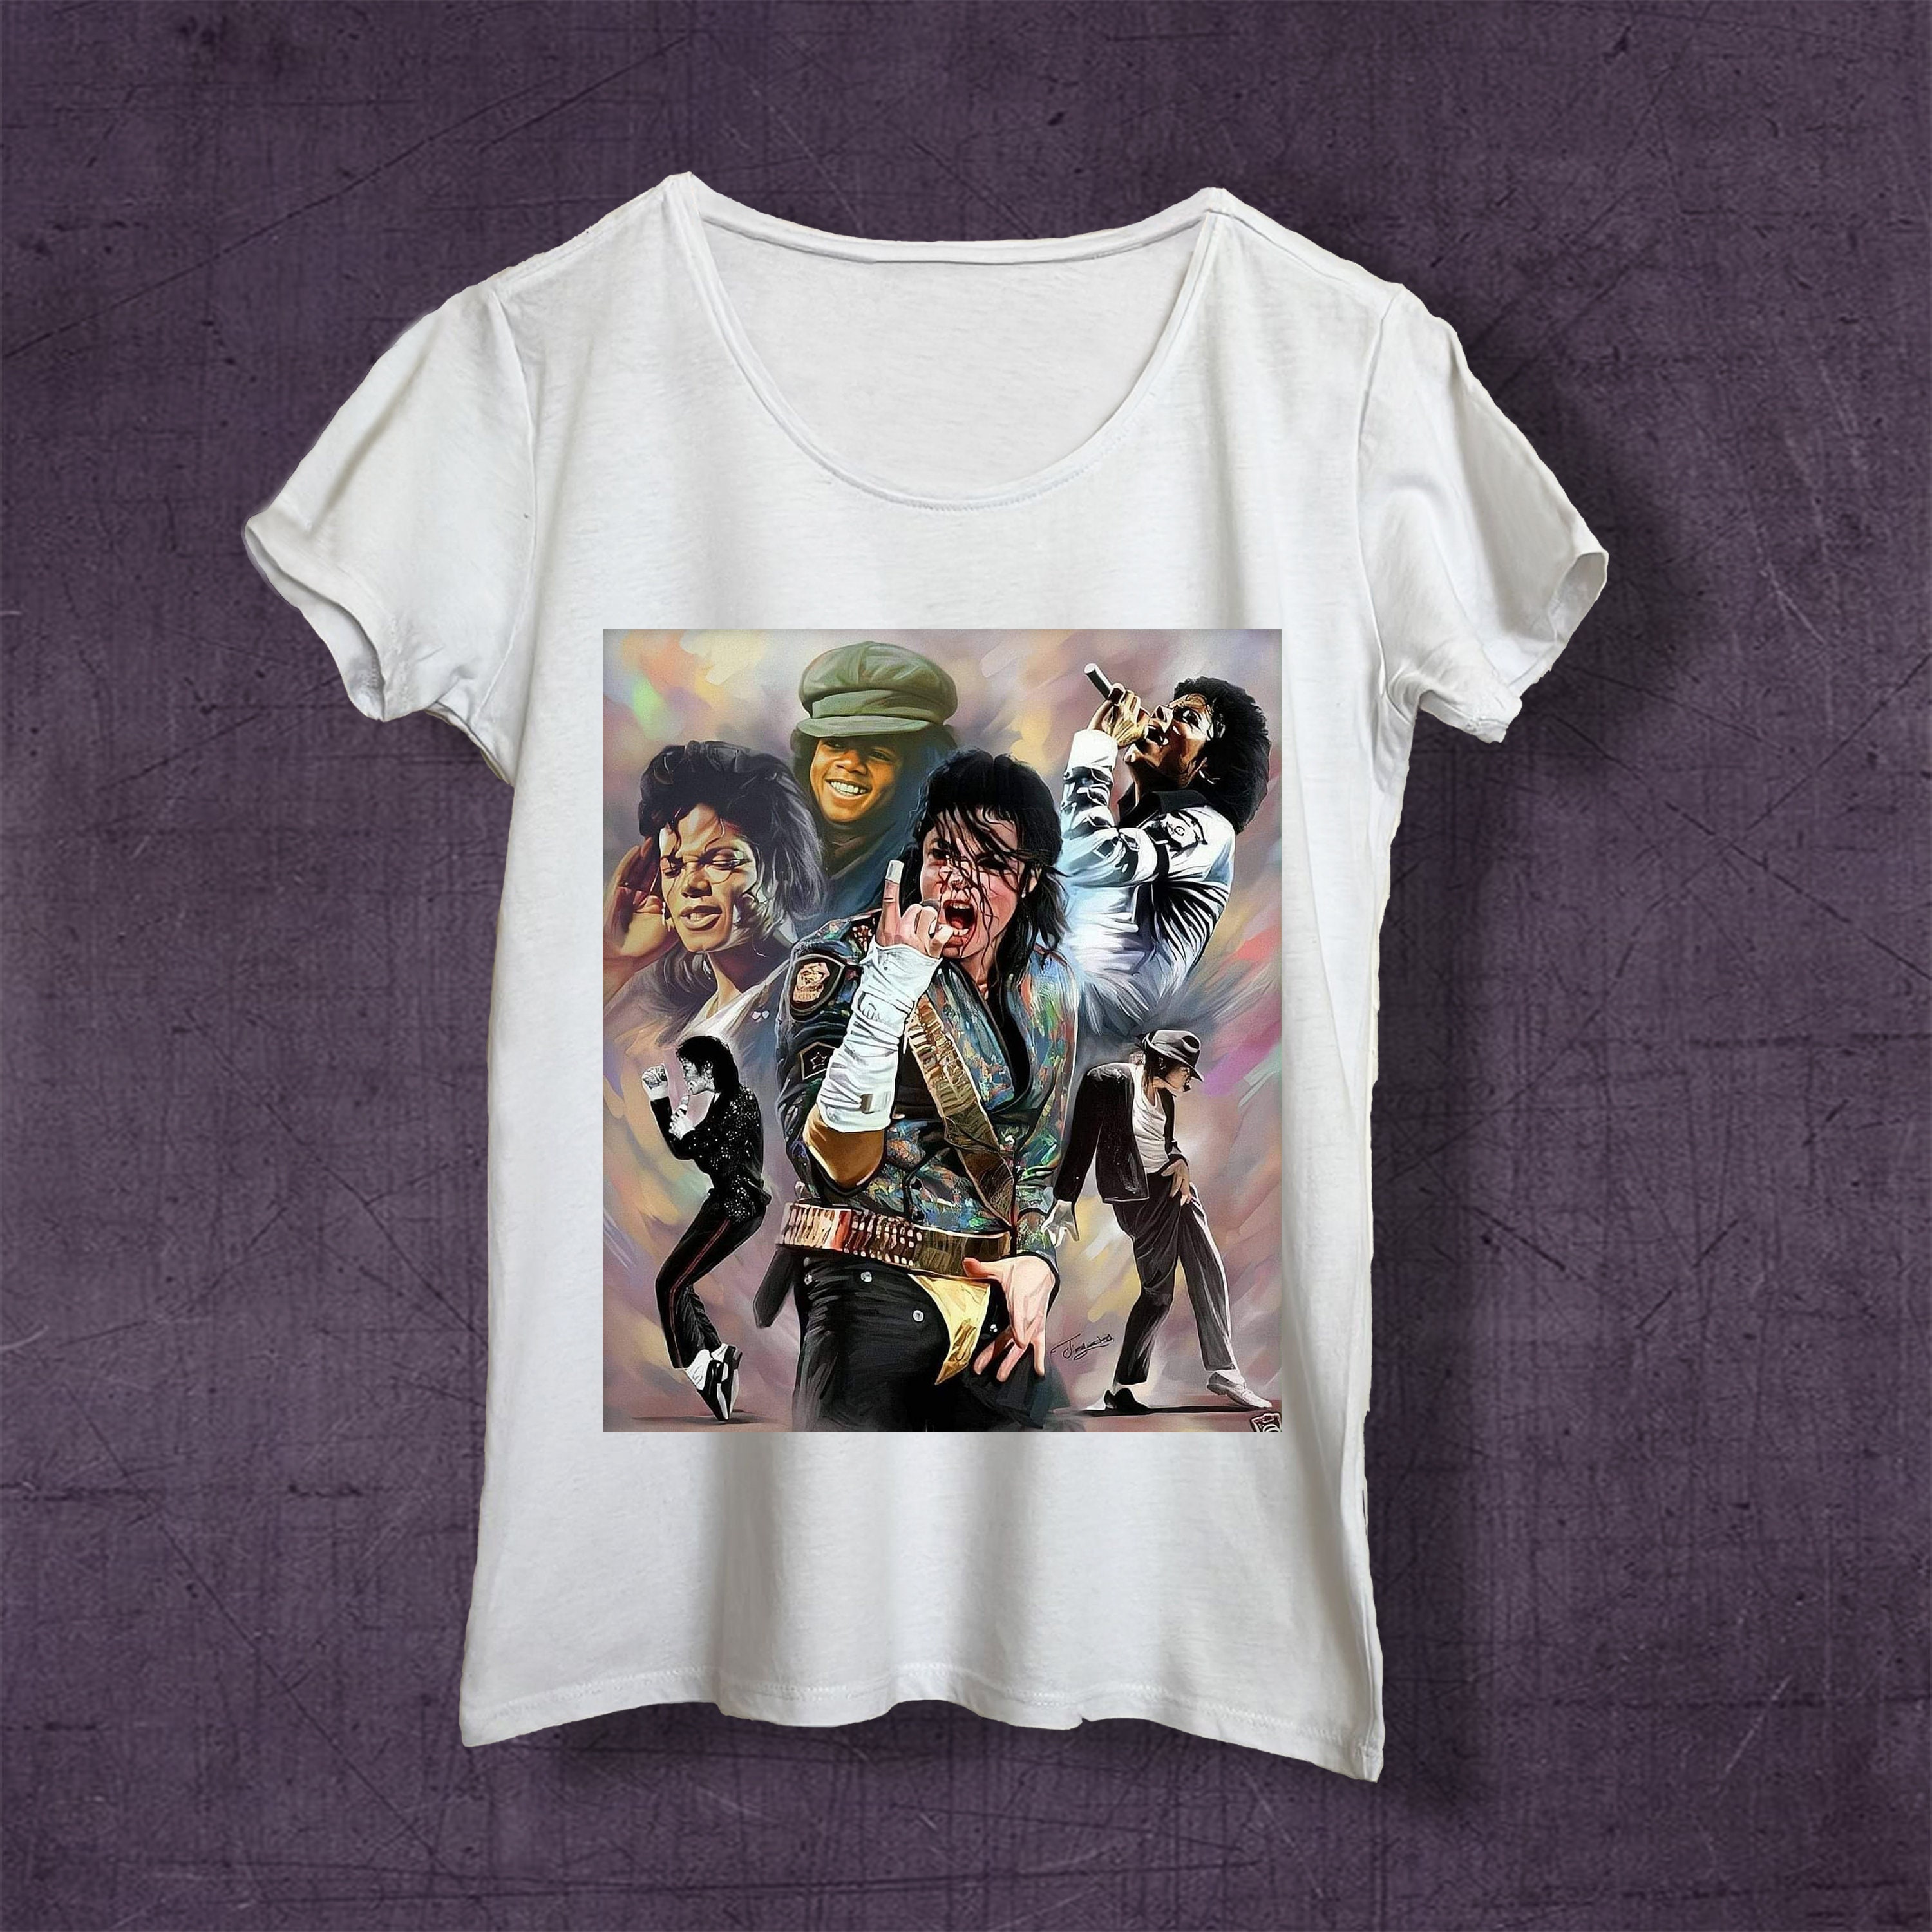 16 The Michael Jackson t-shirt ideas